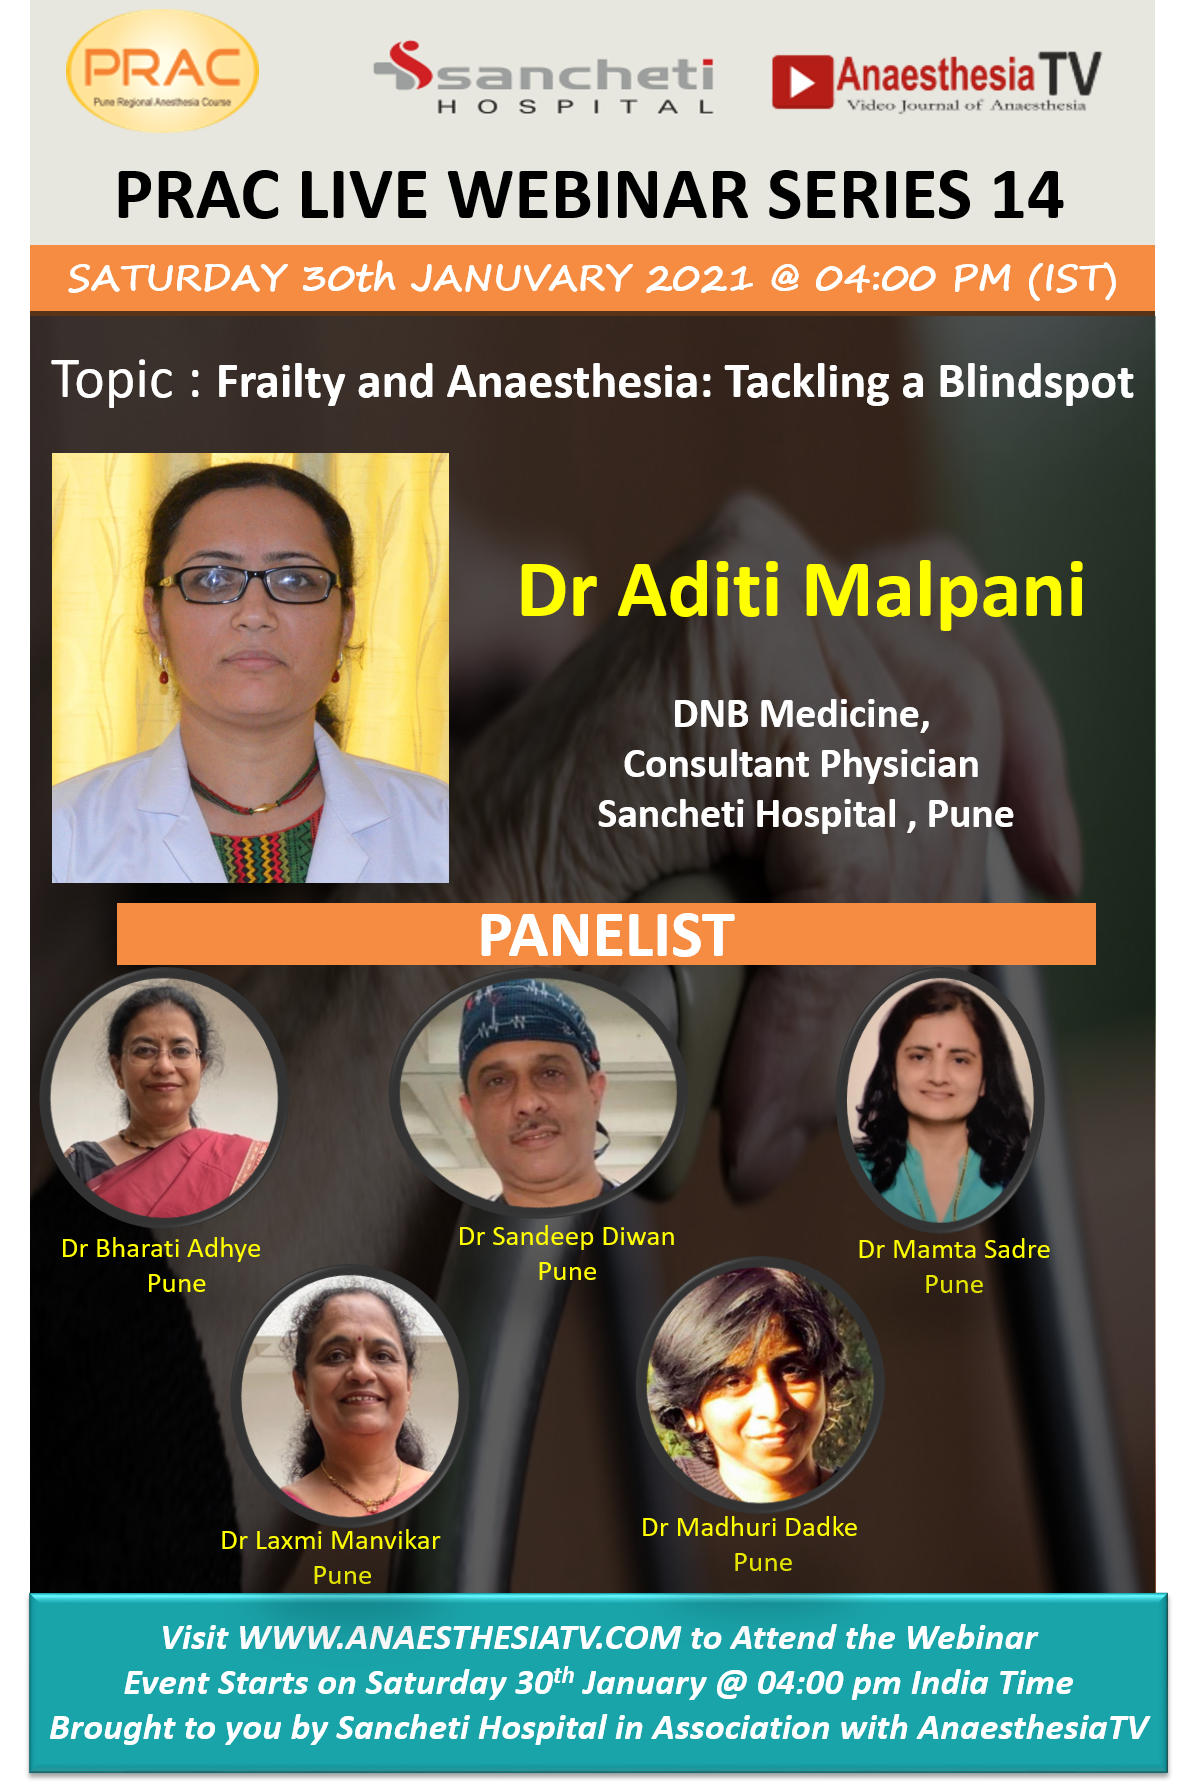 Frailty and Anaesthesia: Tackling a Blindspot by Dr Aditi Malpani